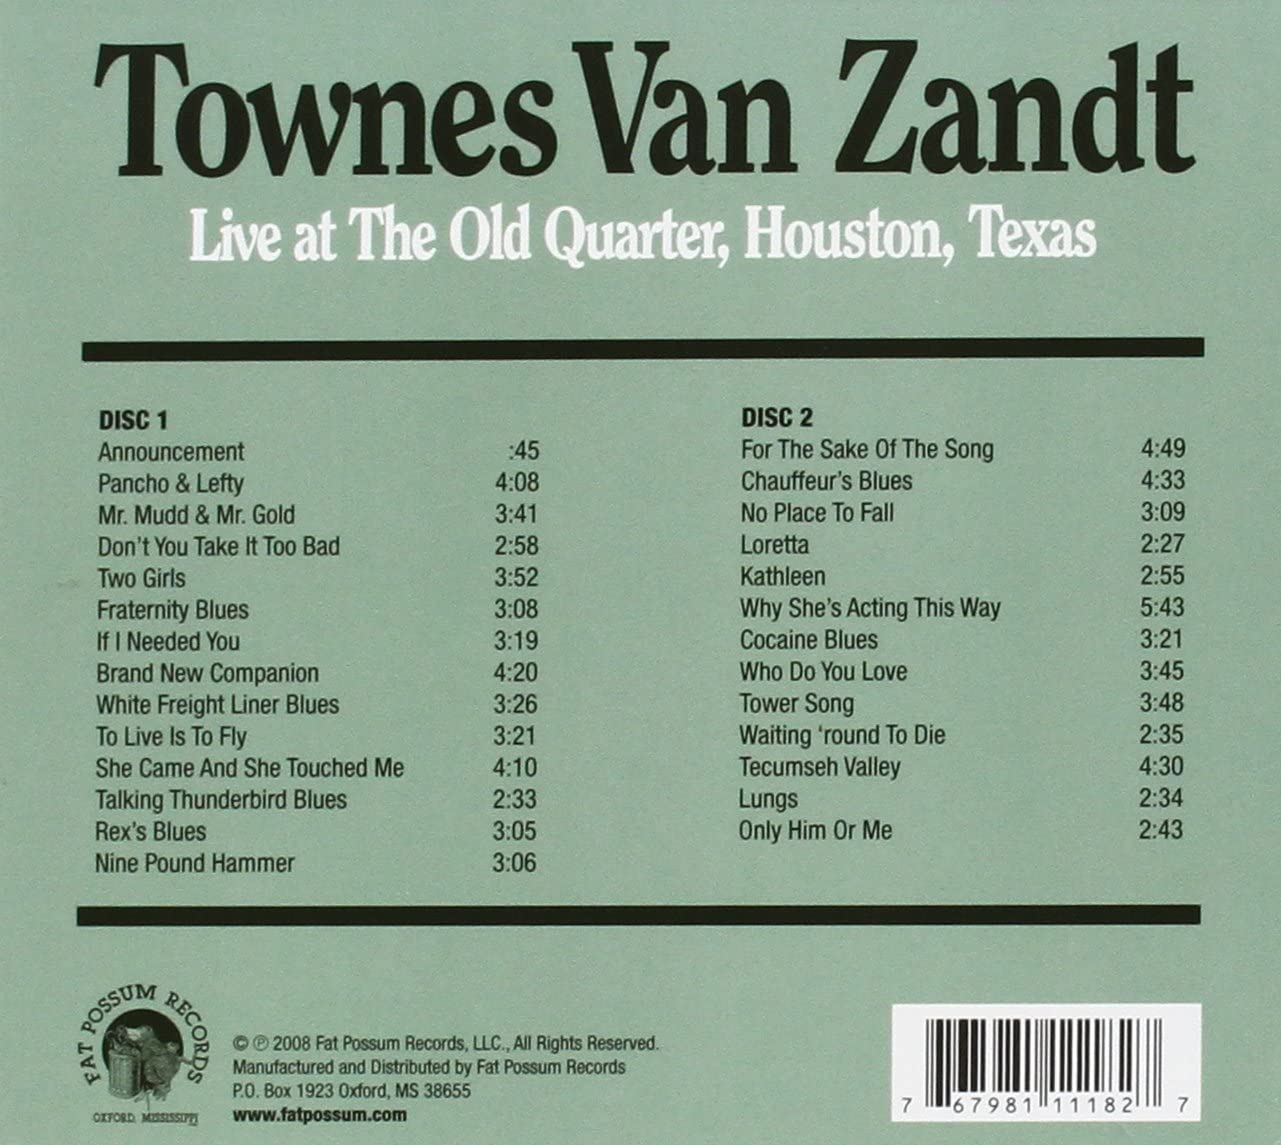 Van Zandt, Townes/Live at the Old Quarter, Houston, Texas [CD]